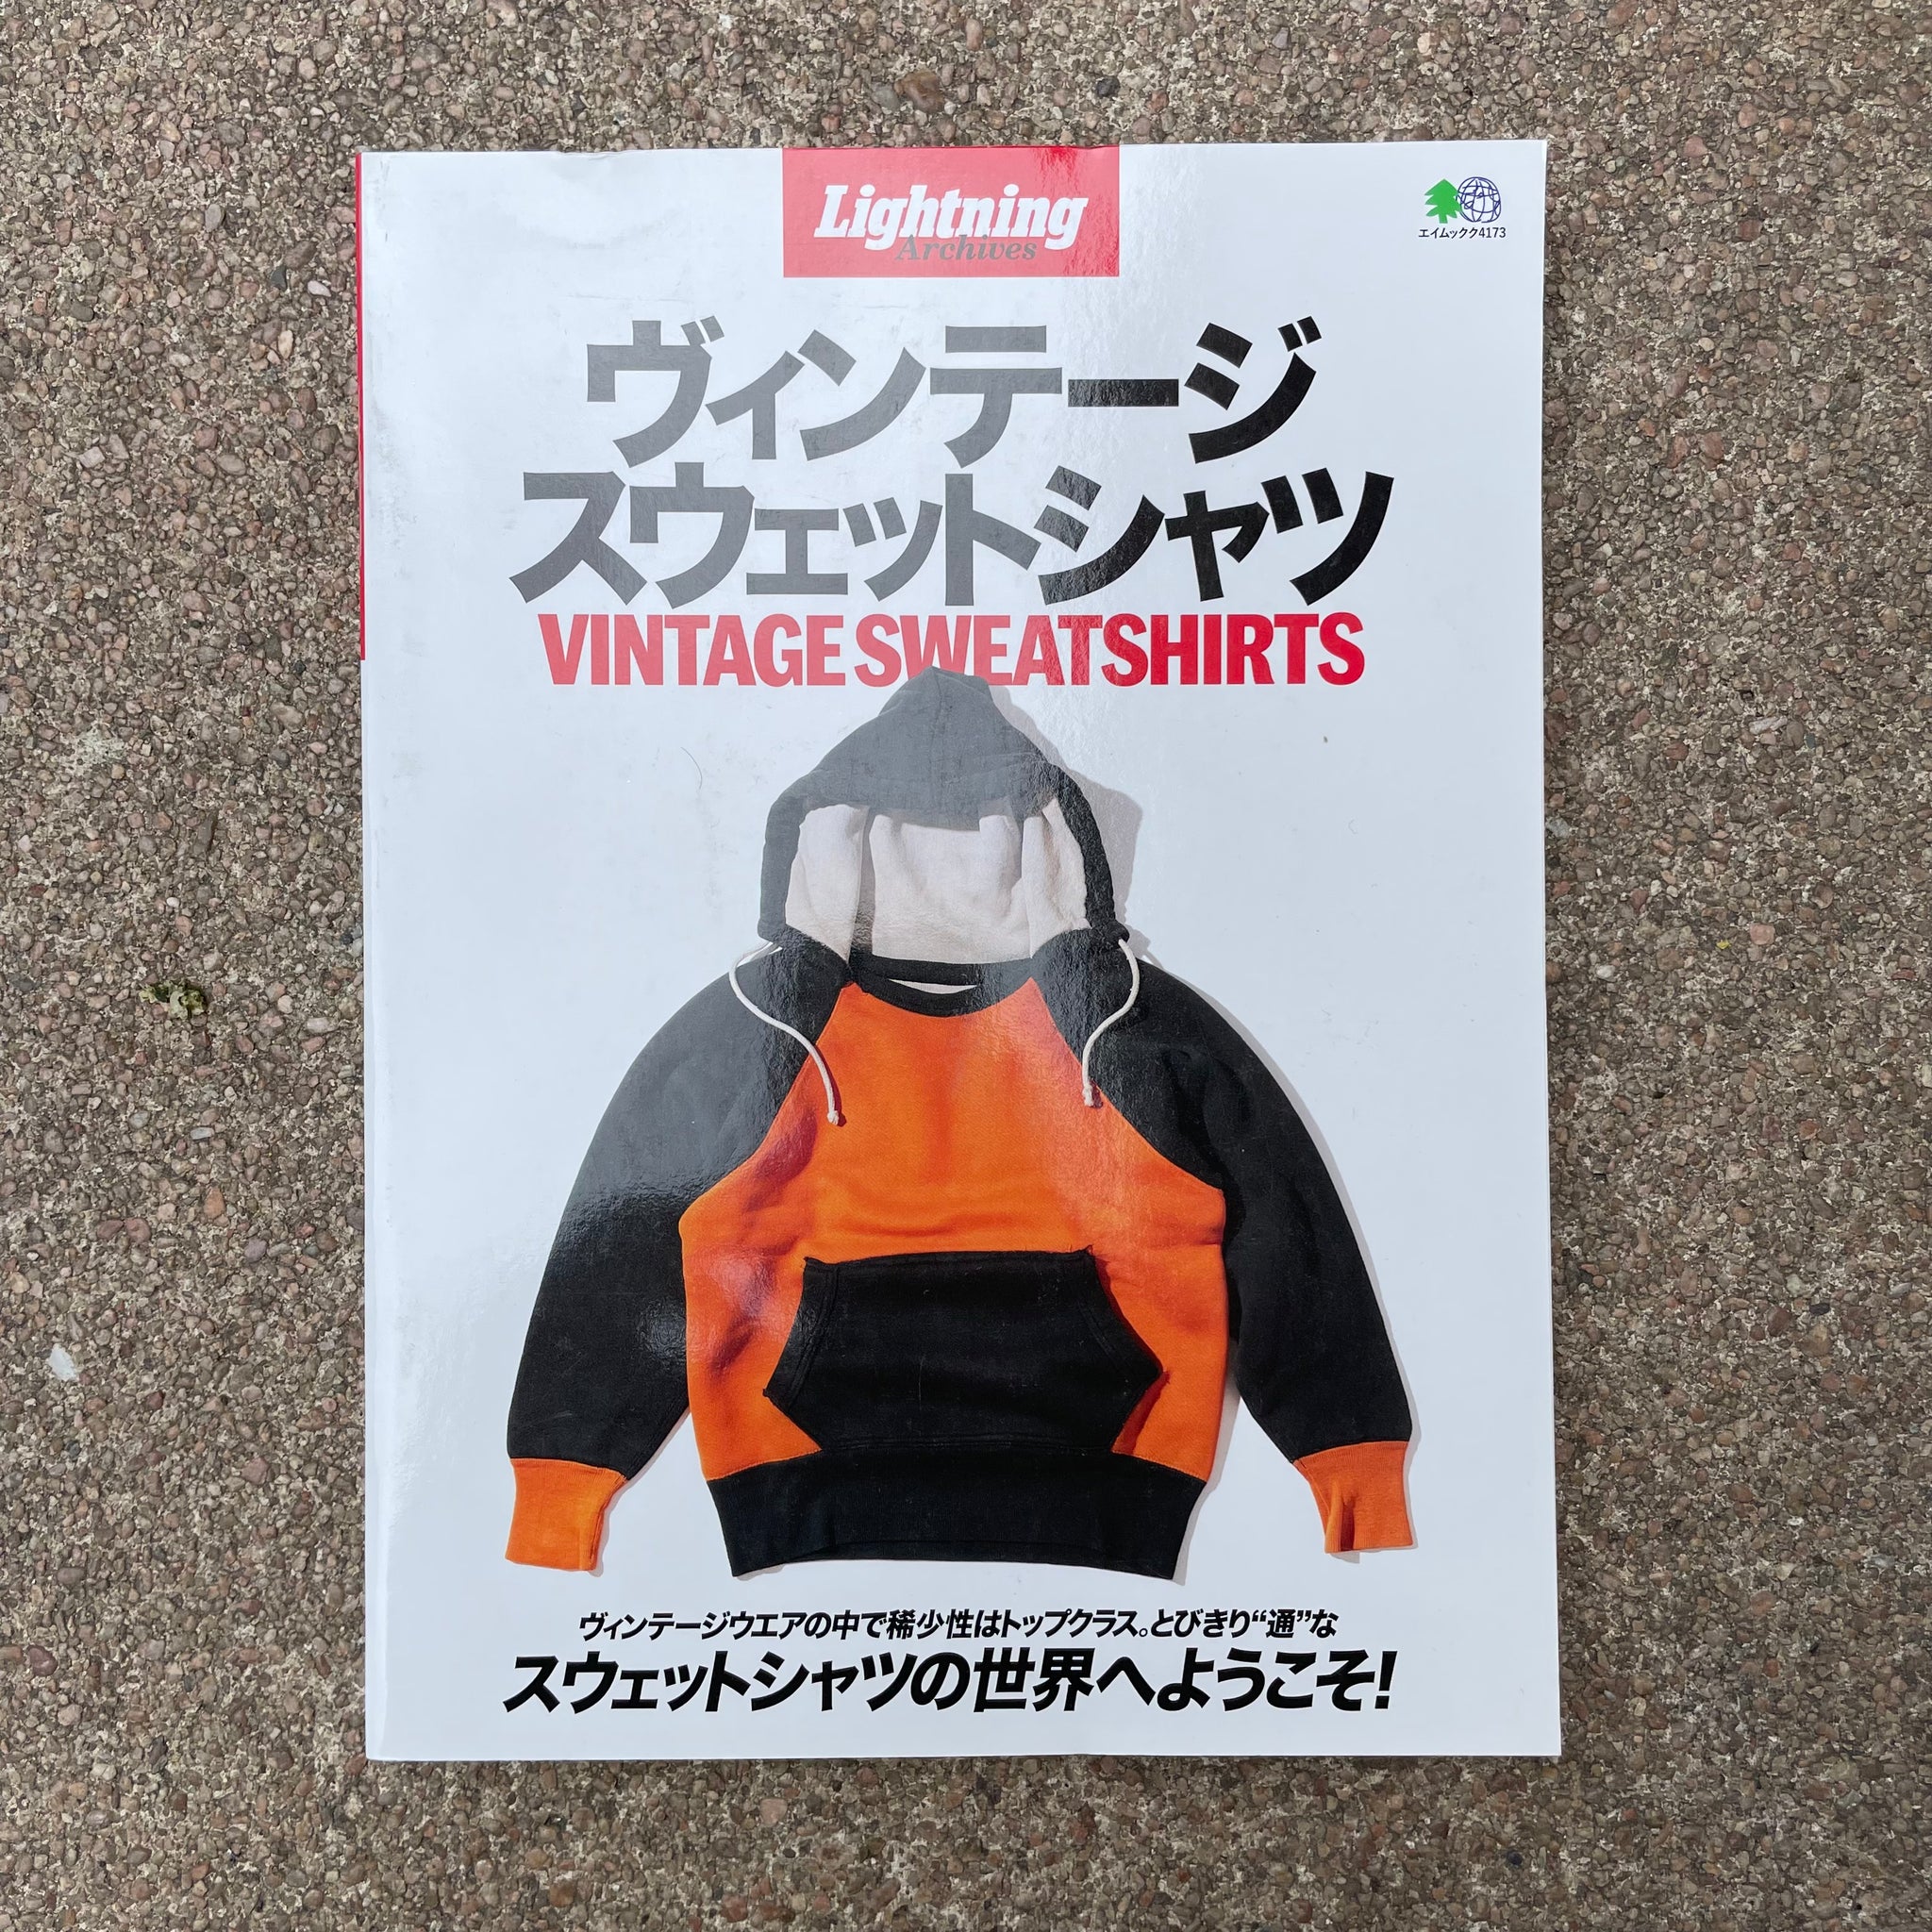 Lightning archives】VINTAGE SWEATSHIRTS 人気の商品 sandorobotics.com